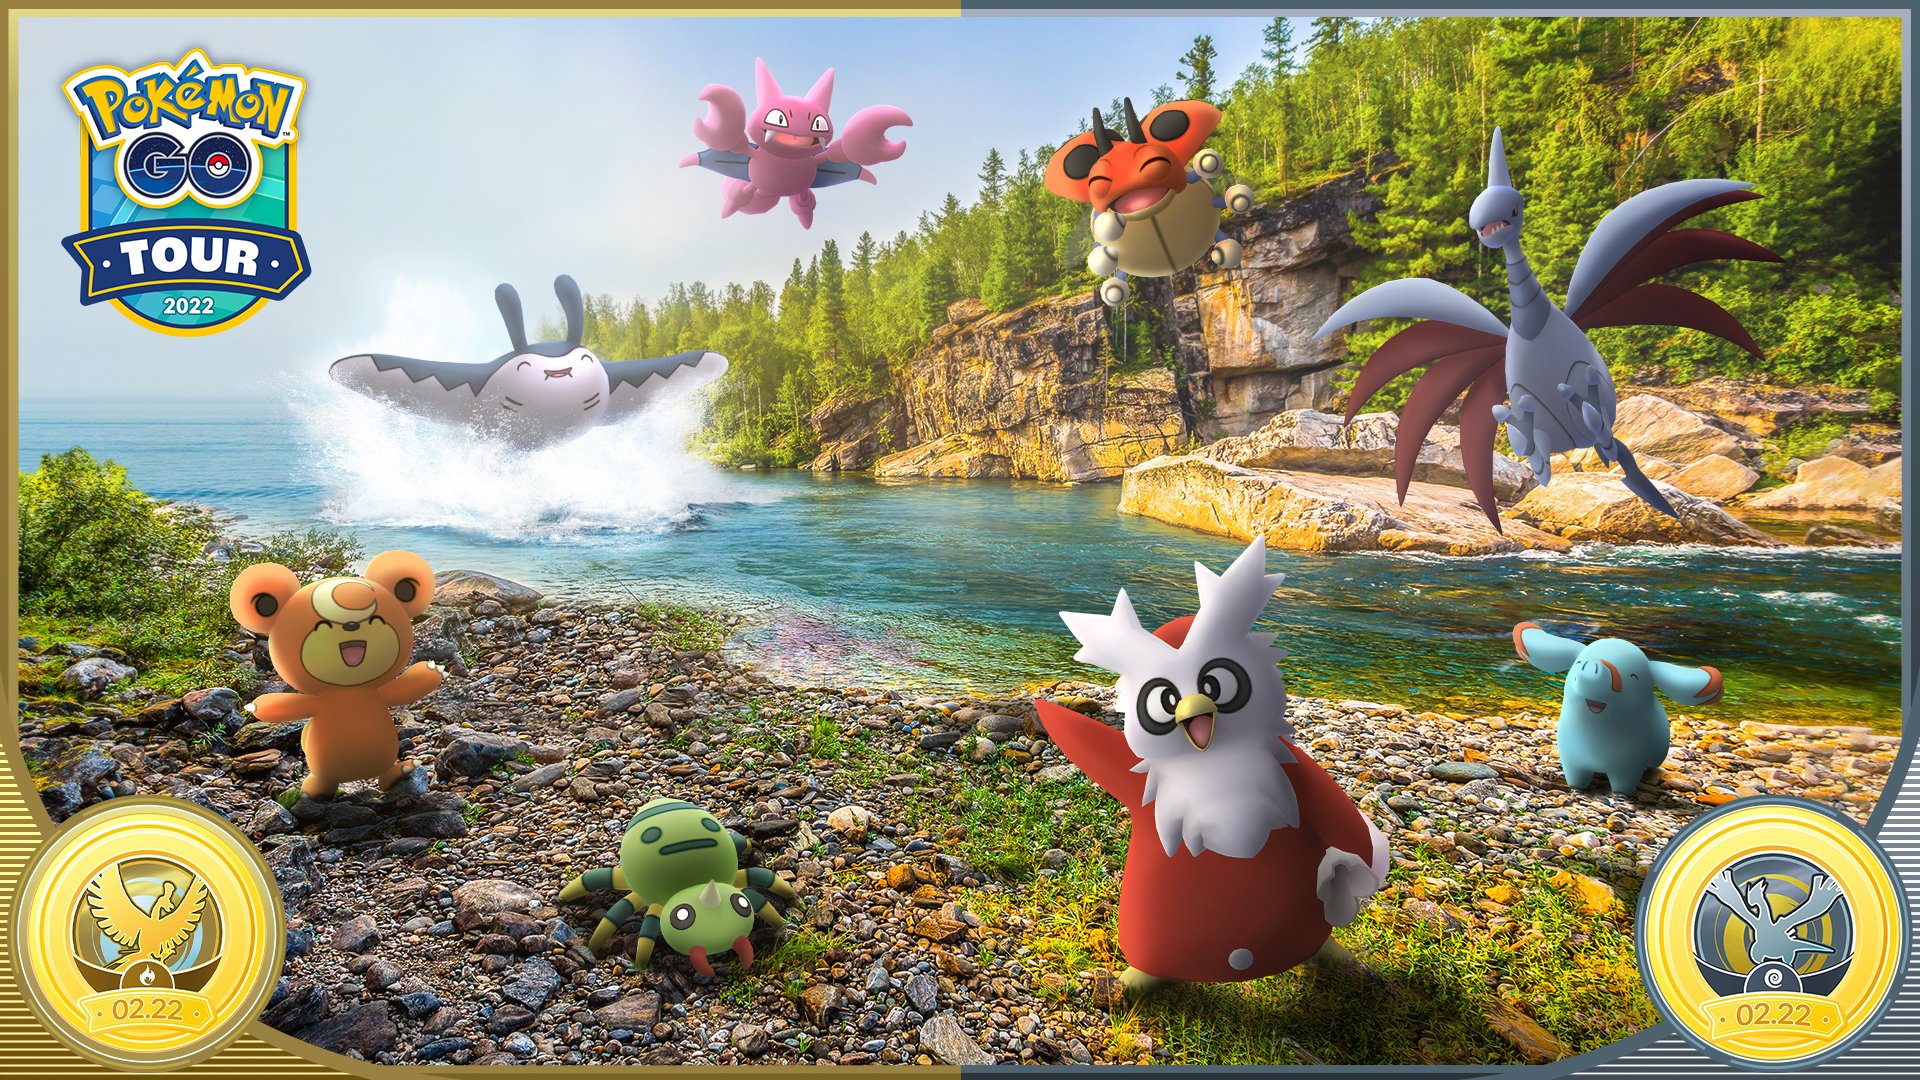 Pokémon Go Tour Johto 2022 event times schedule rewards and free activities explained